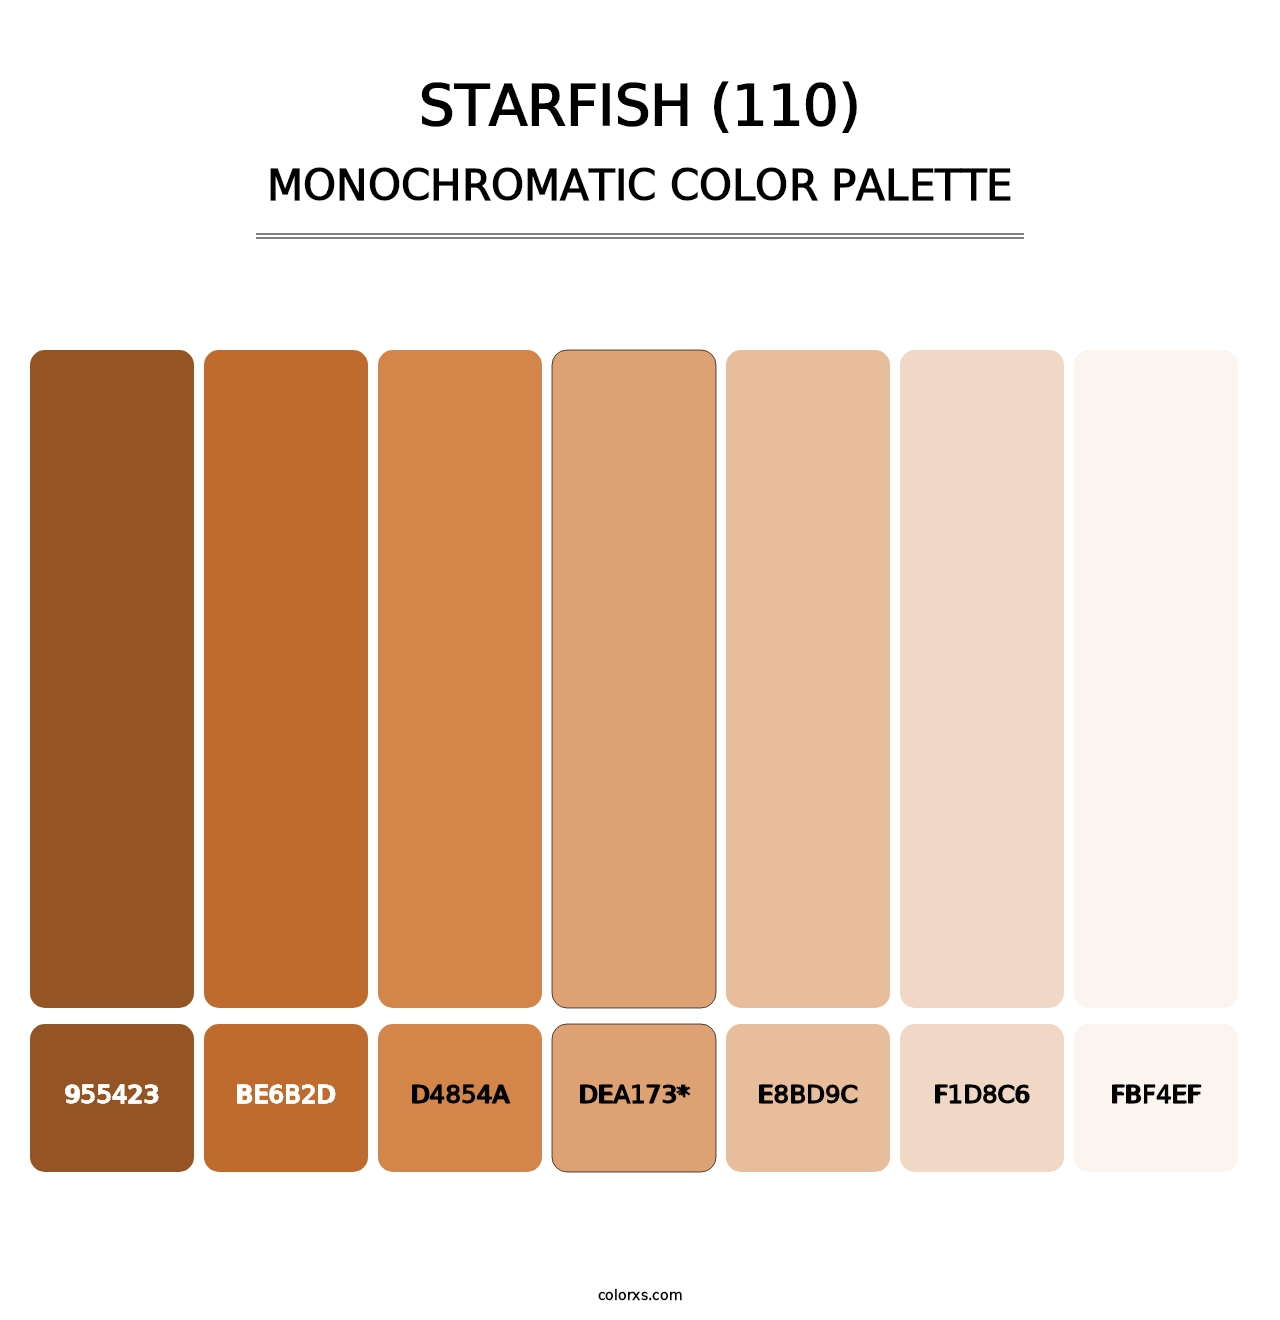 Starfish (110) - Monochromatic Color Palette